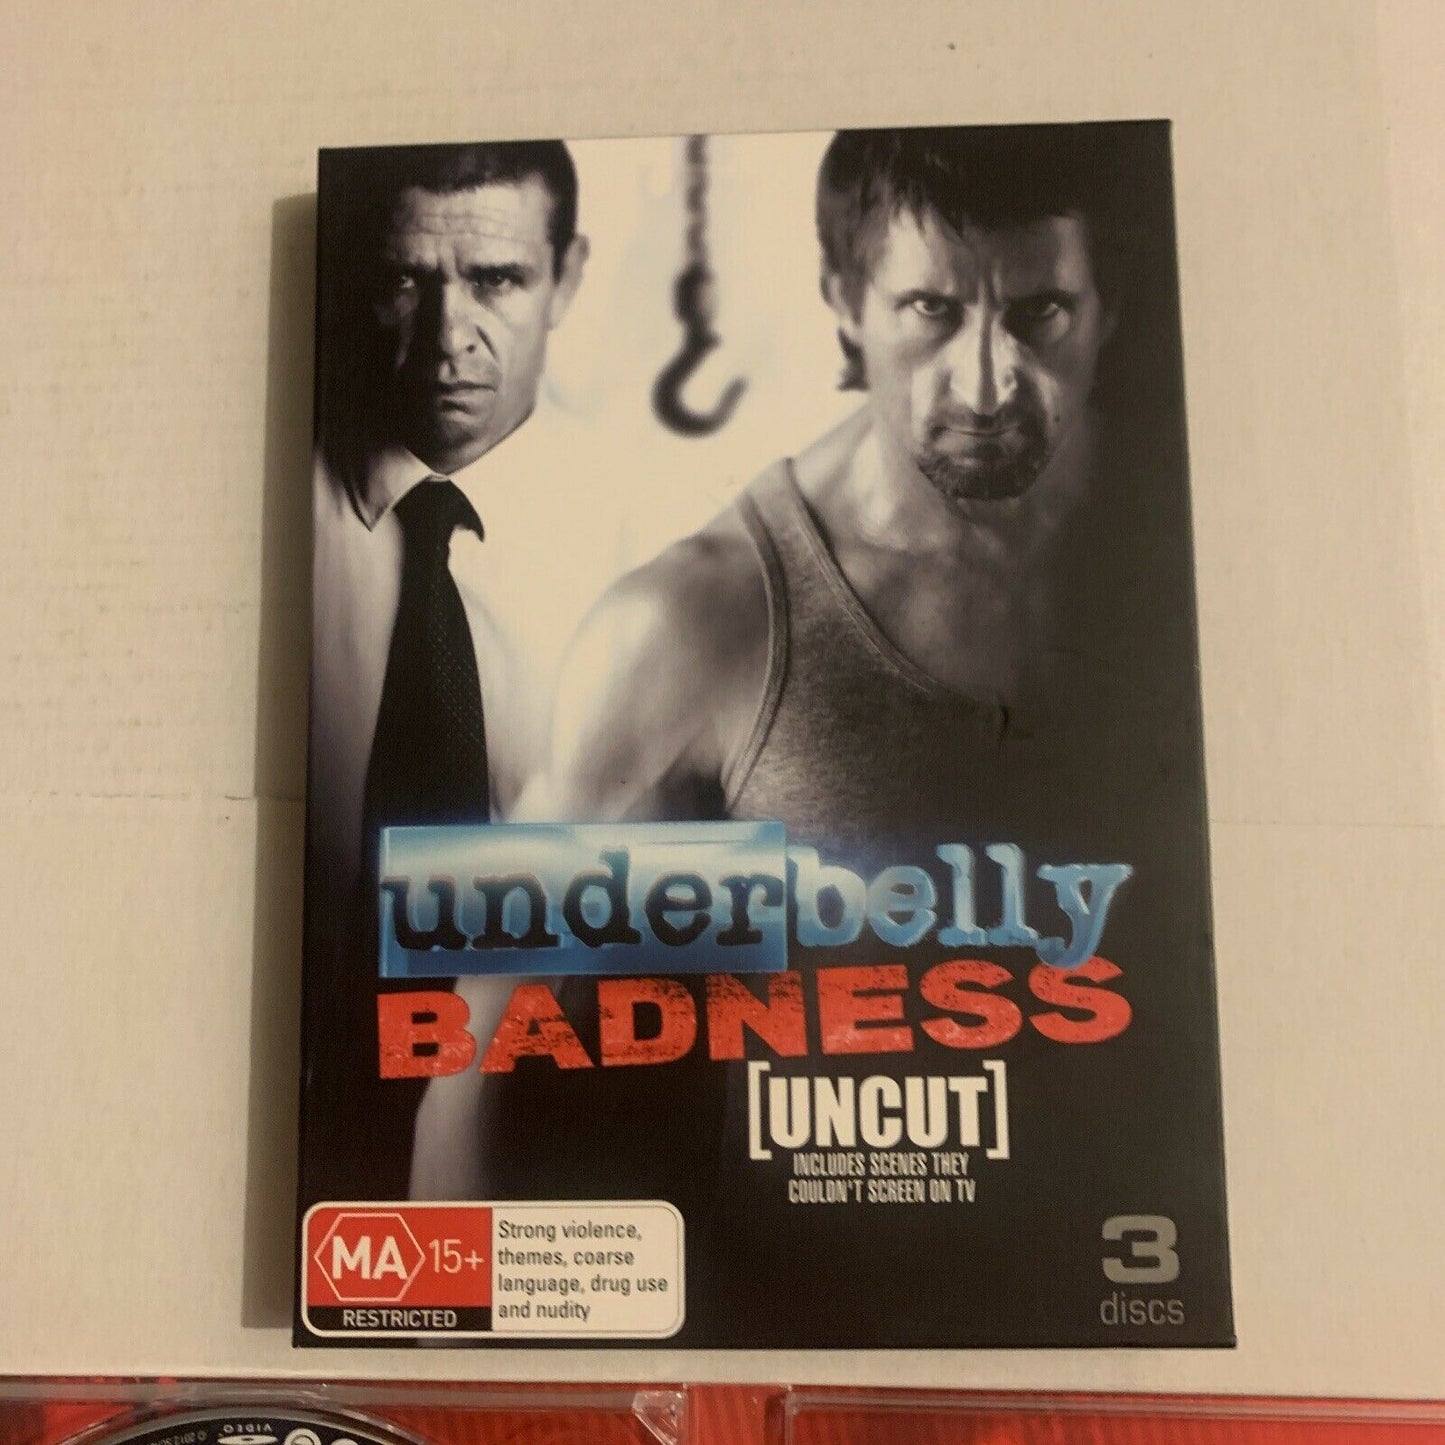 Underbelly Badness Uncut (DVD, 2012, 3-Disc) Matt Nable. Region 4